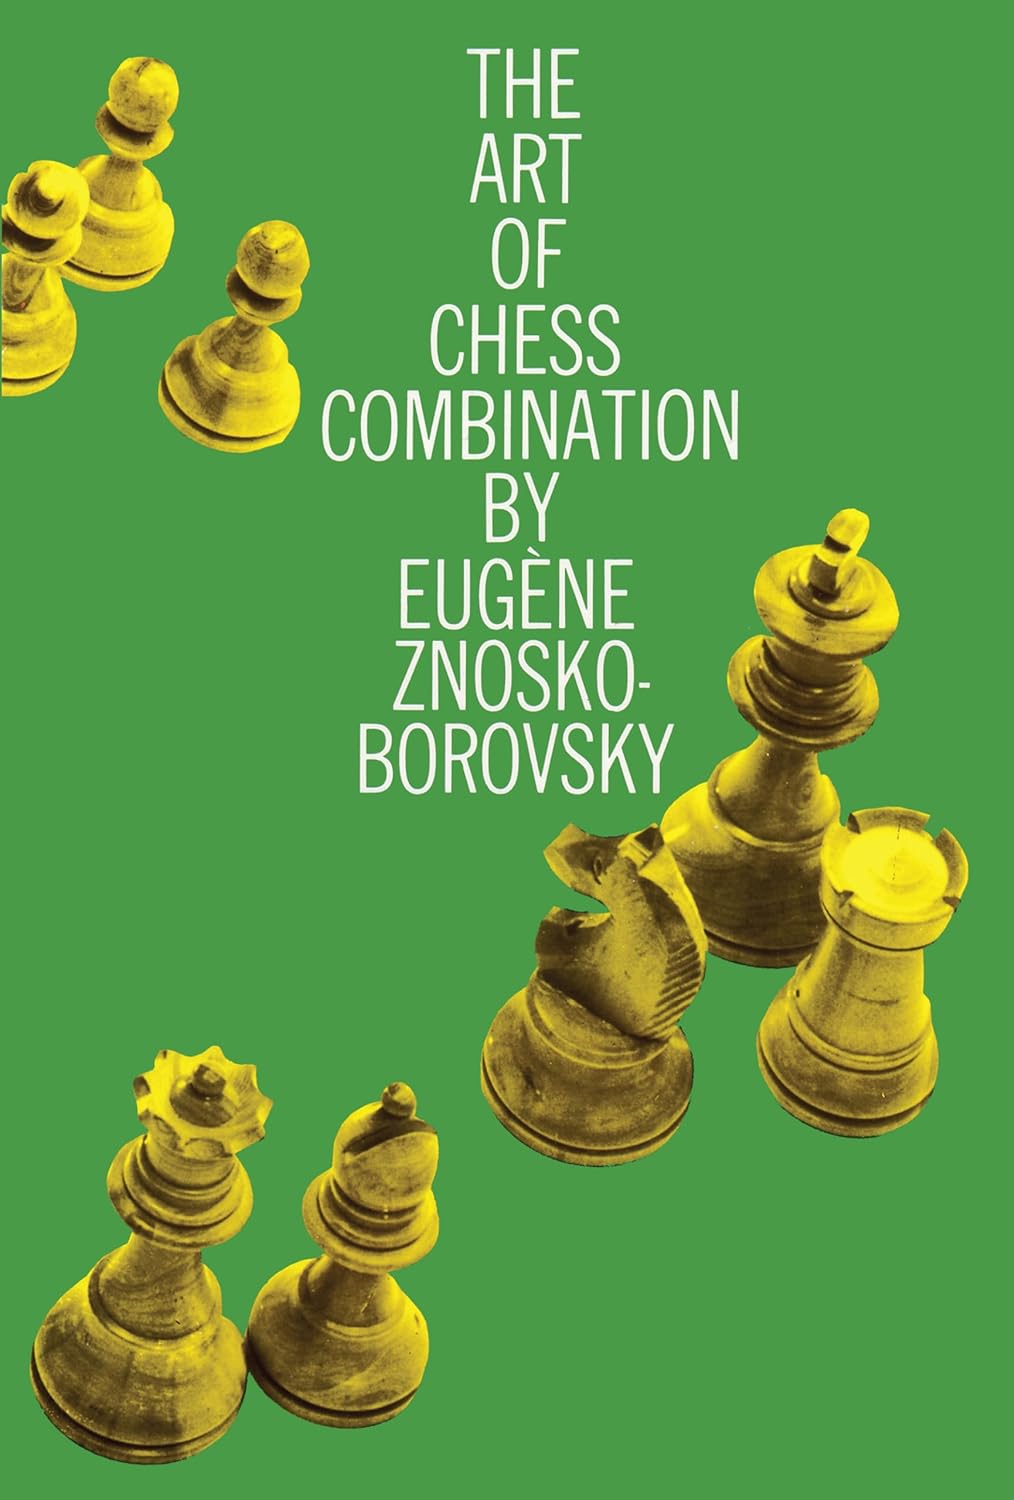 Znosko-Borovsky: The Art of Chess Combination